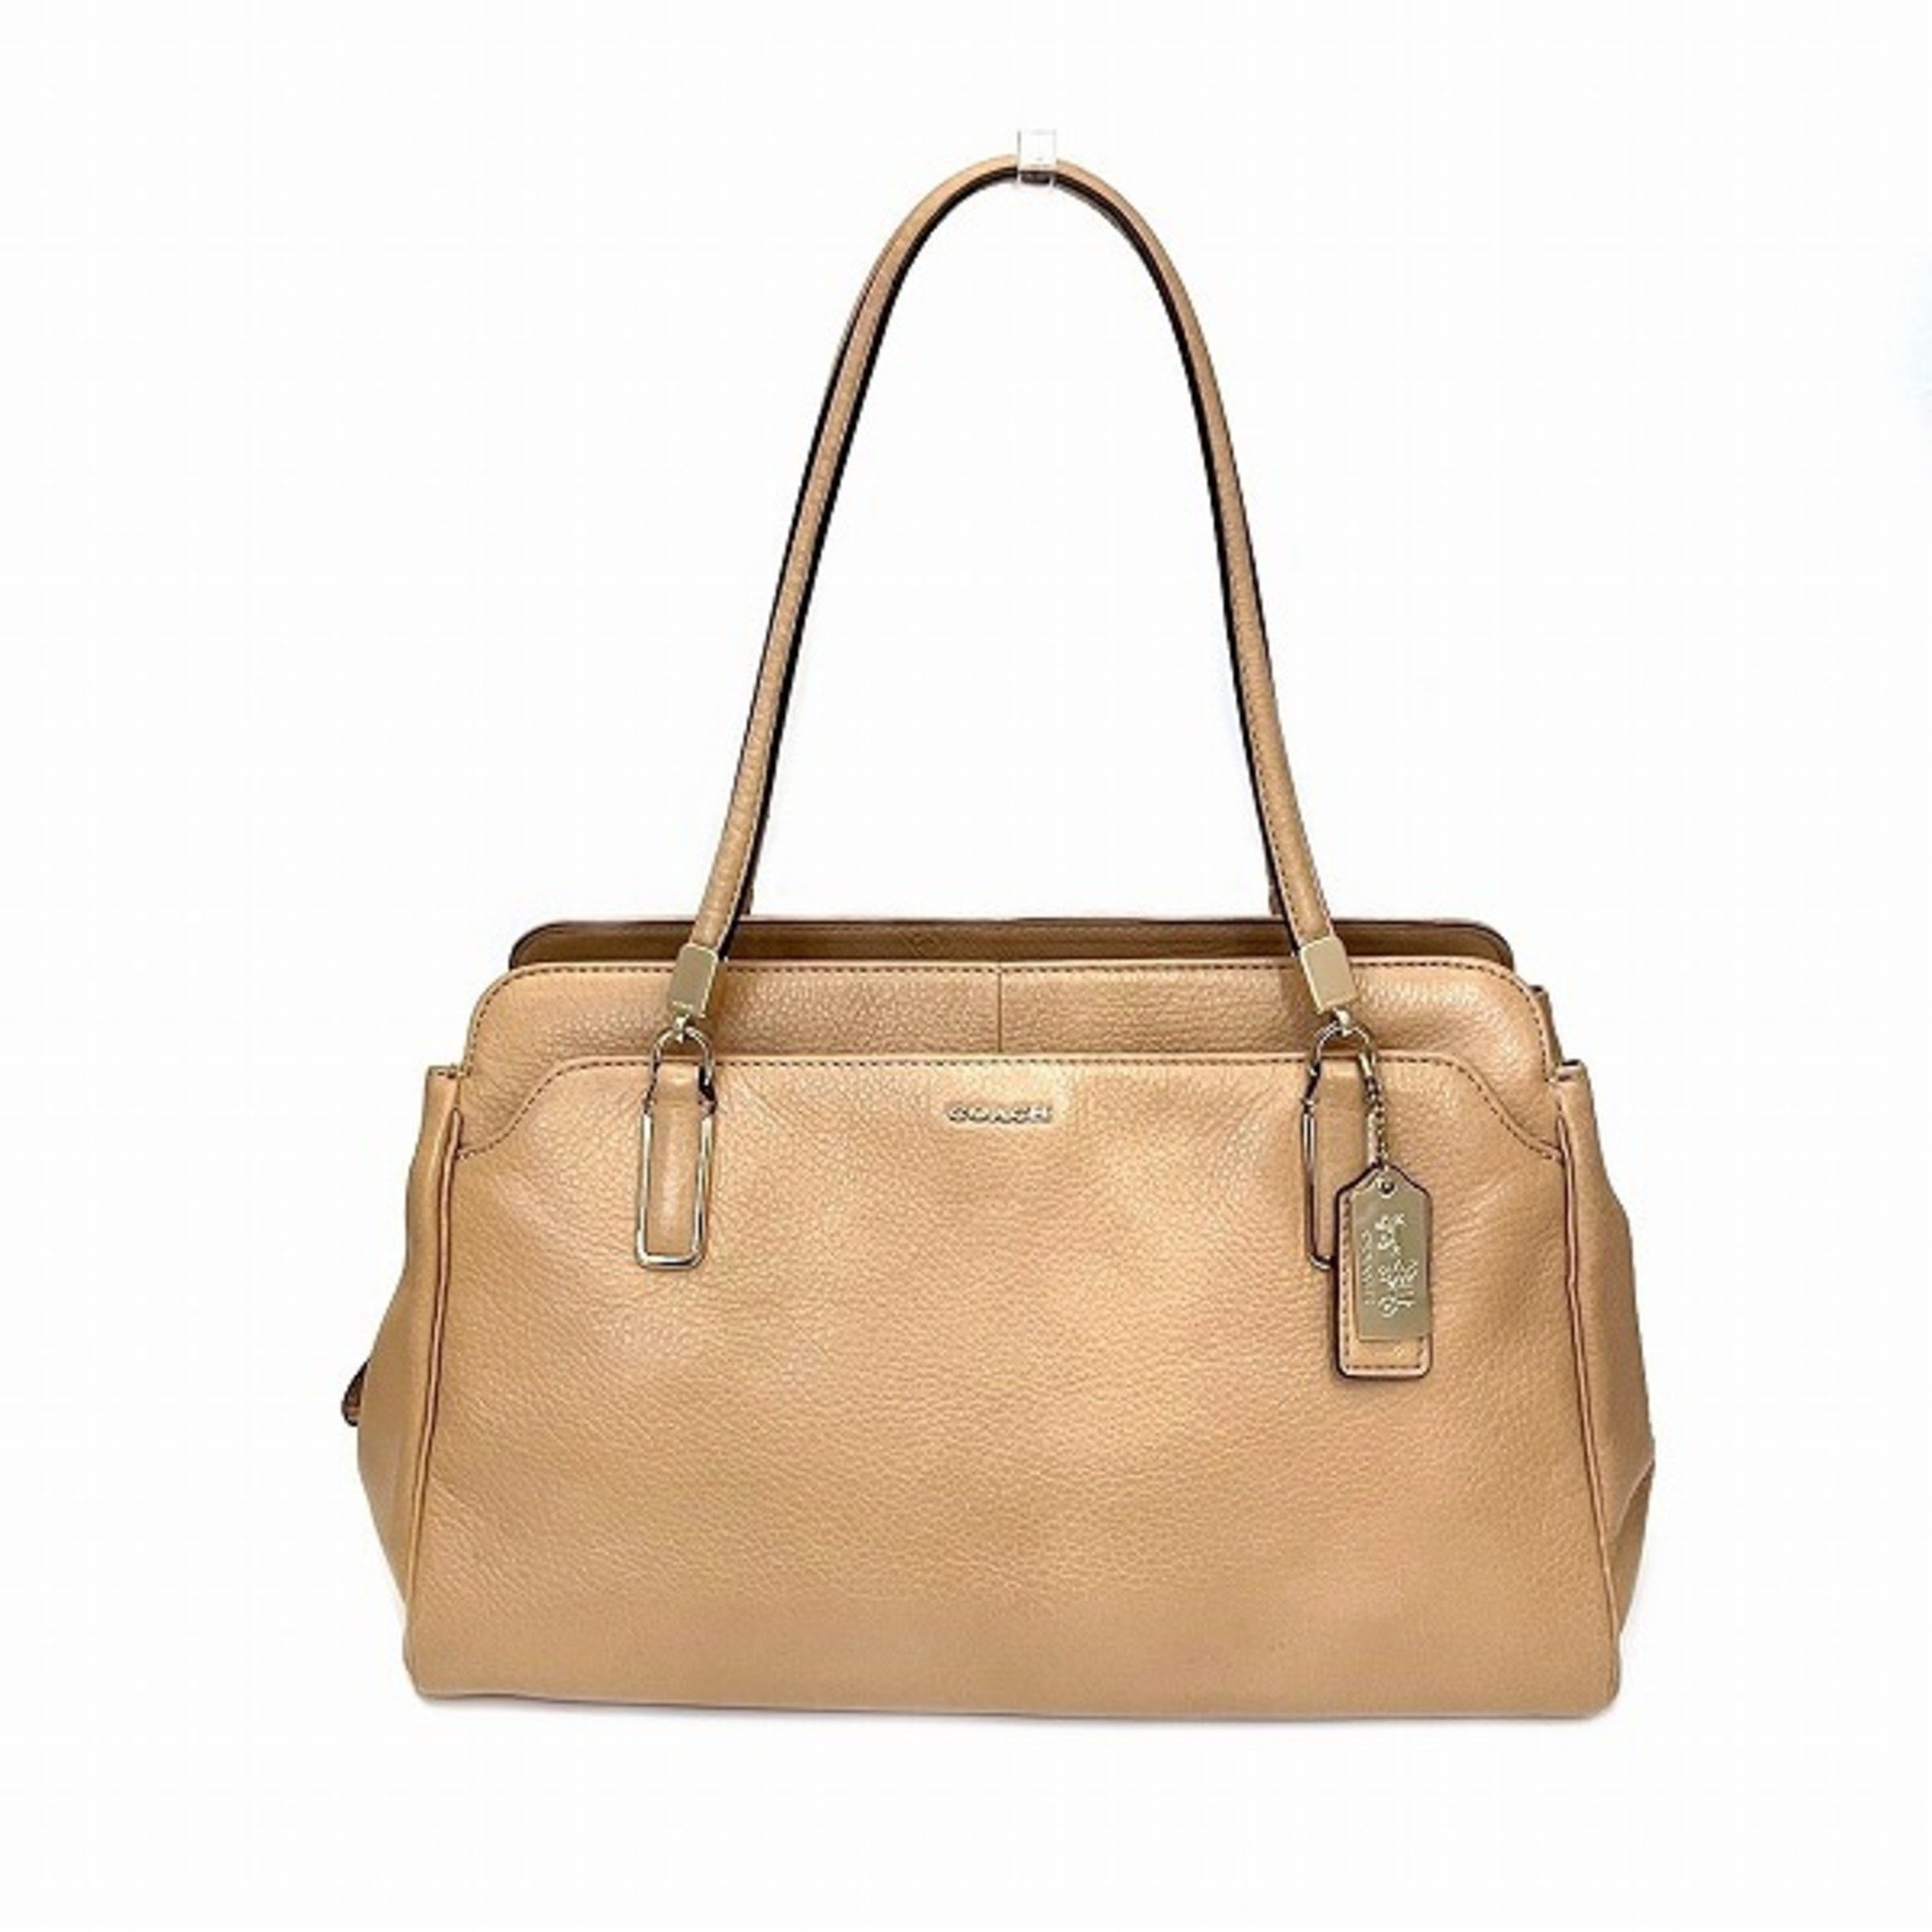 Coach Kimberly Carryall 25161 Bag Handbag Tote Ladies